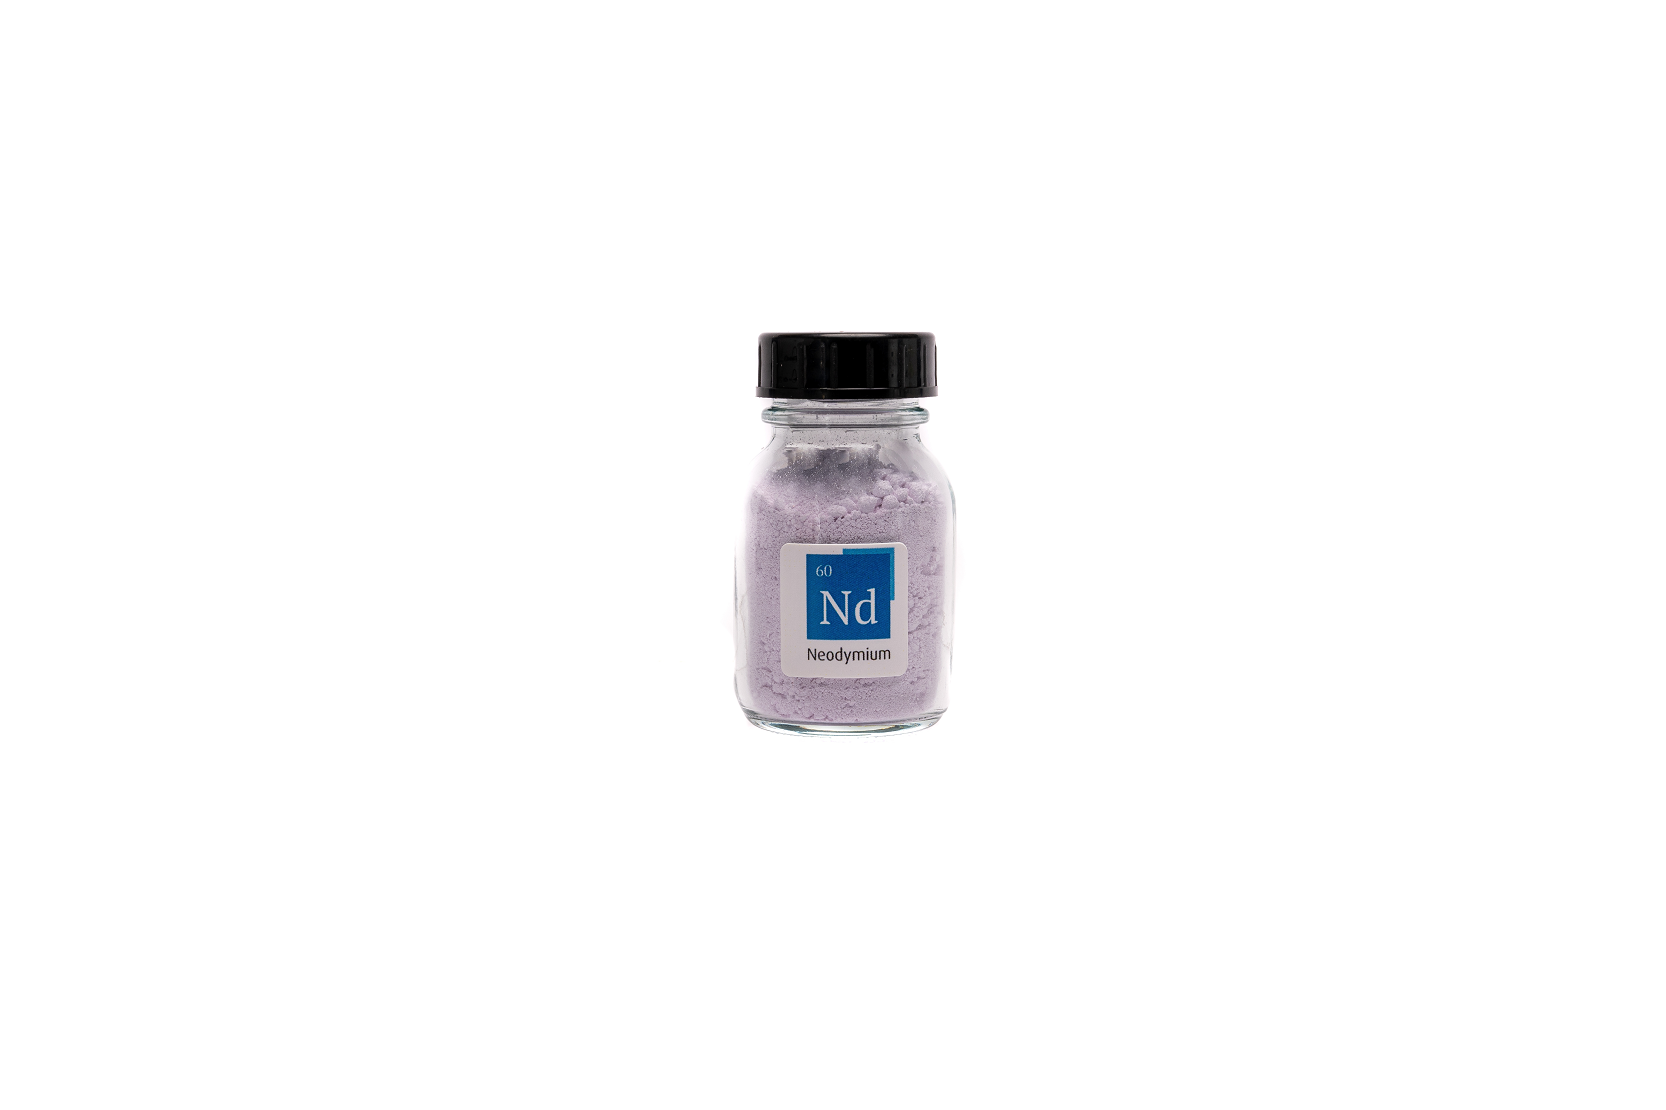 Neodymium powder technology